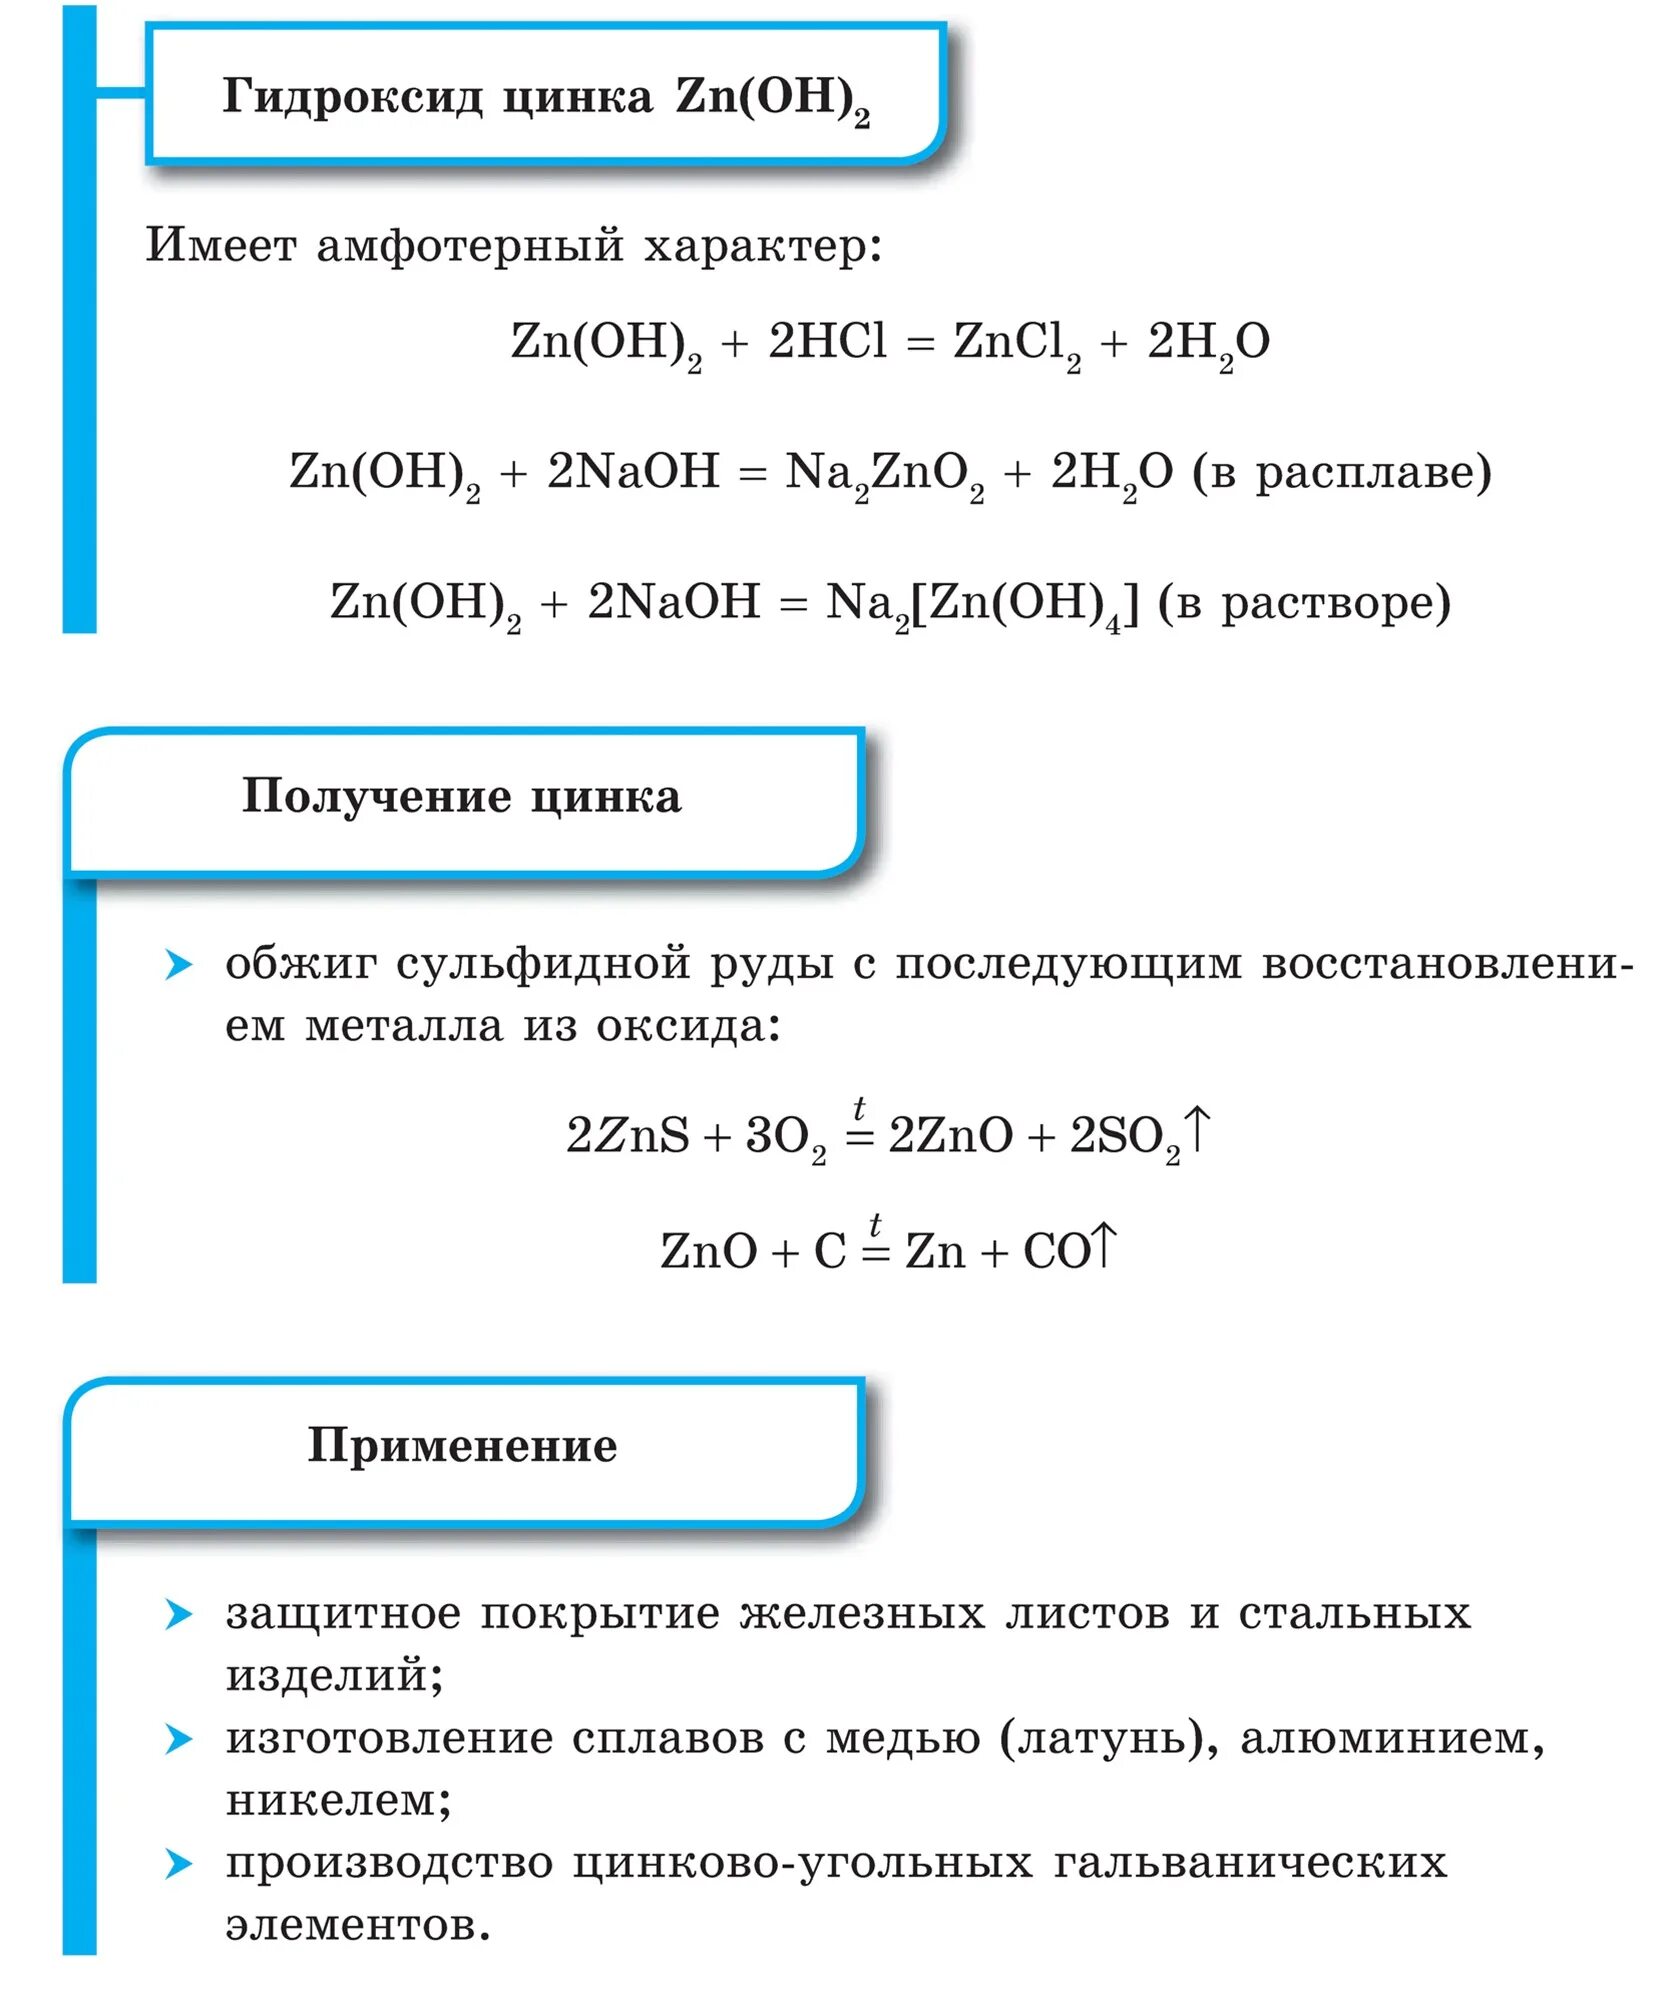 Характеристика zn. Химические свойства цинка таблица. Медь химический элемент характеристика. Характеристика цинка. Химические свойства цинка.